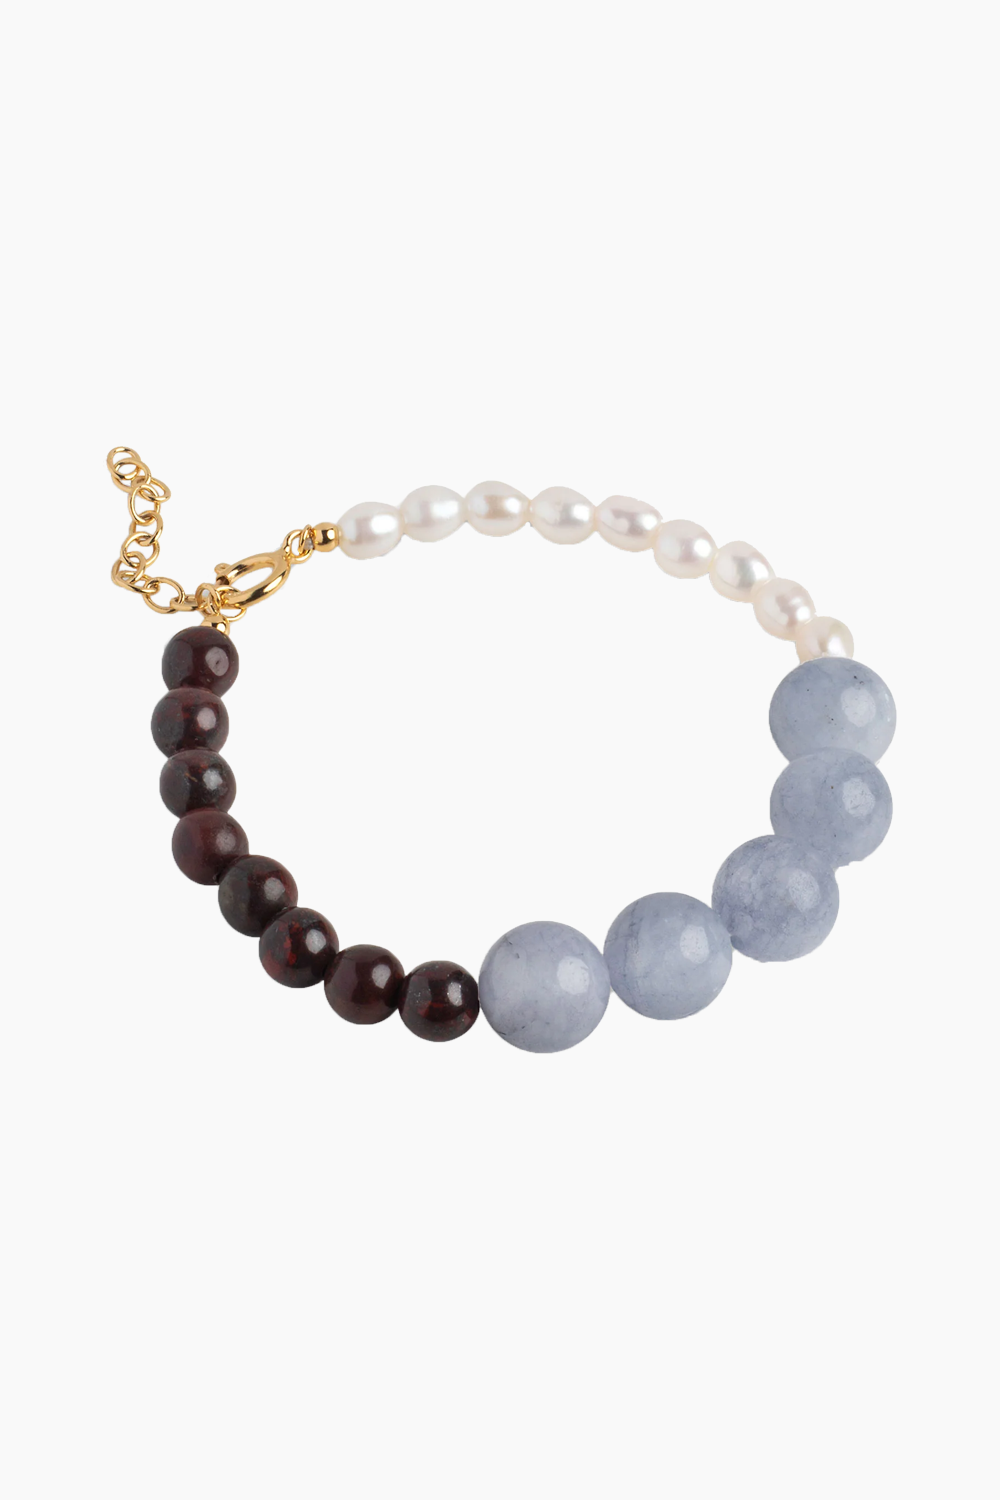 Bracelet Marli - Pearls, Light Grey and Brown - ENAMEL